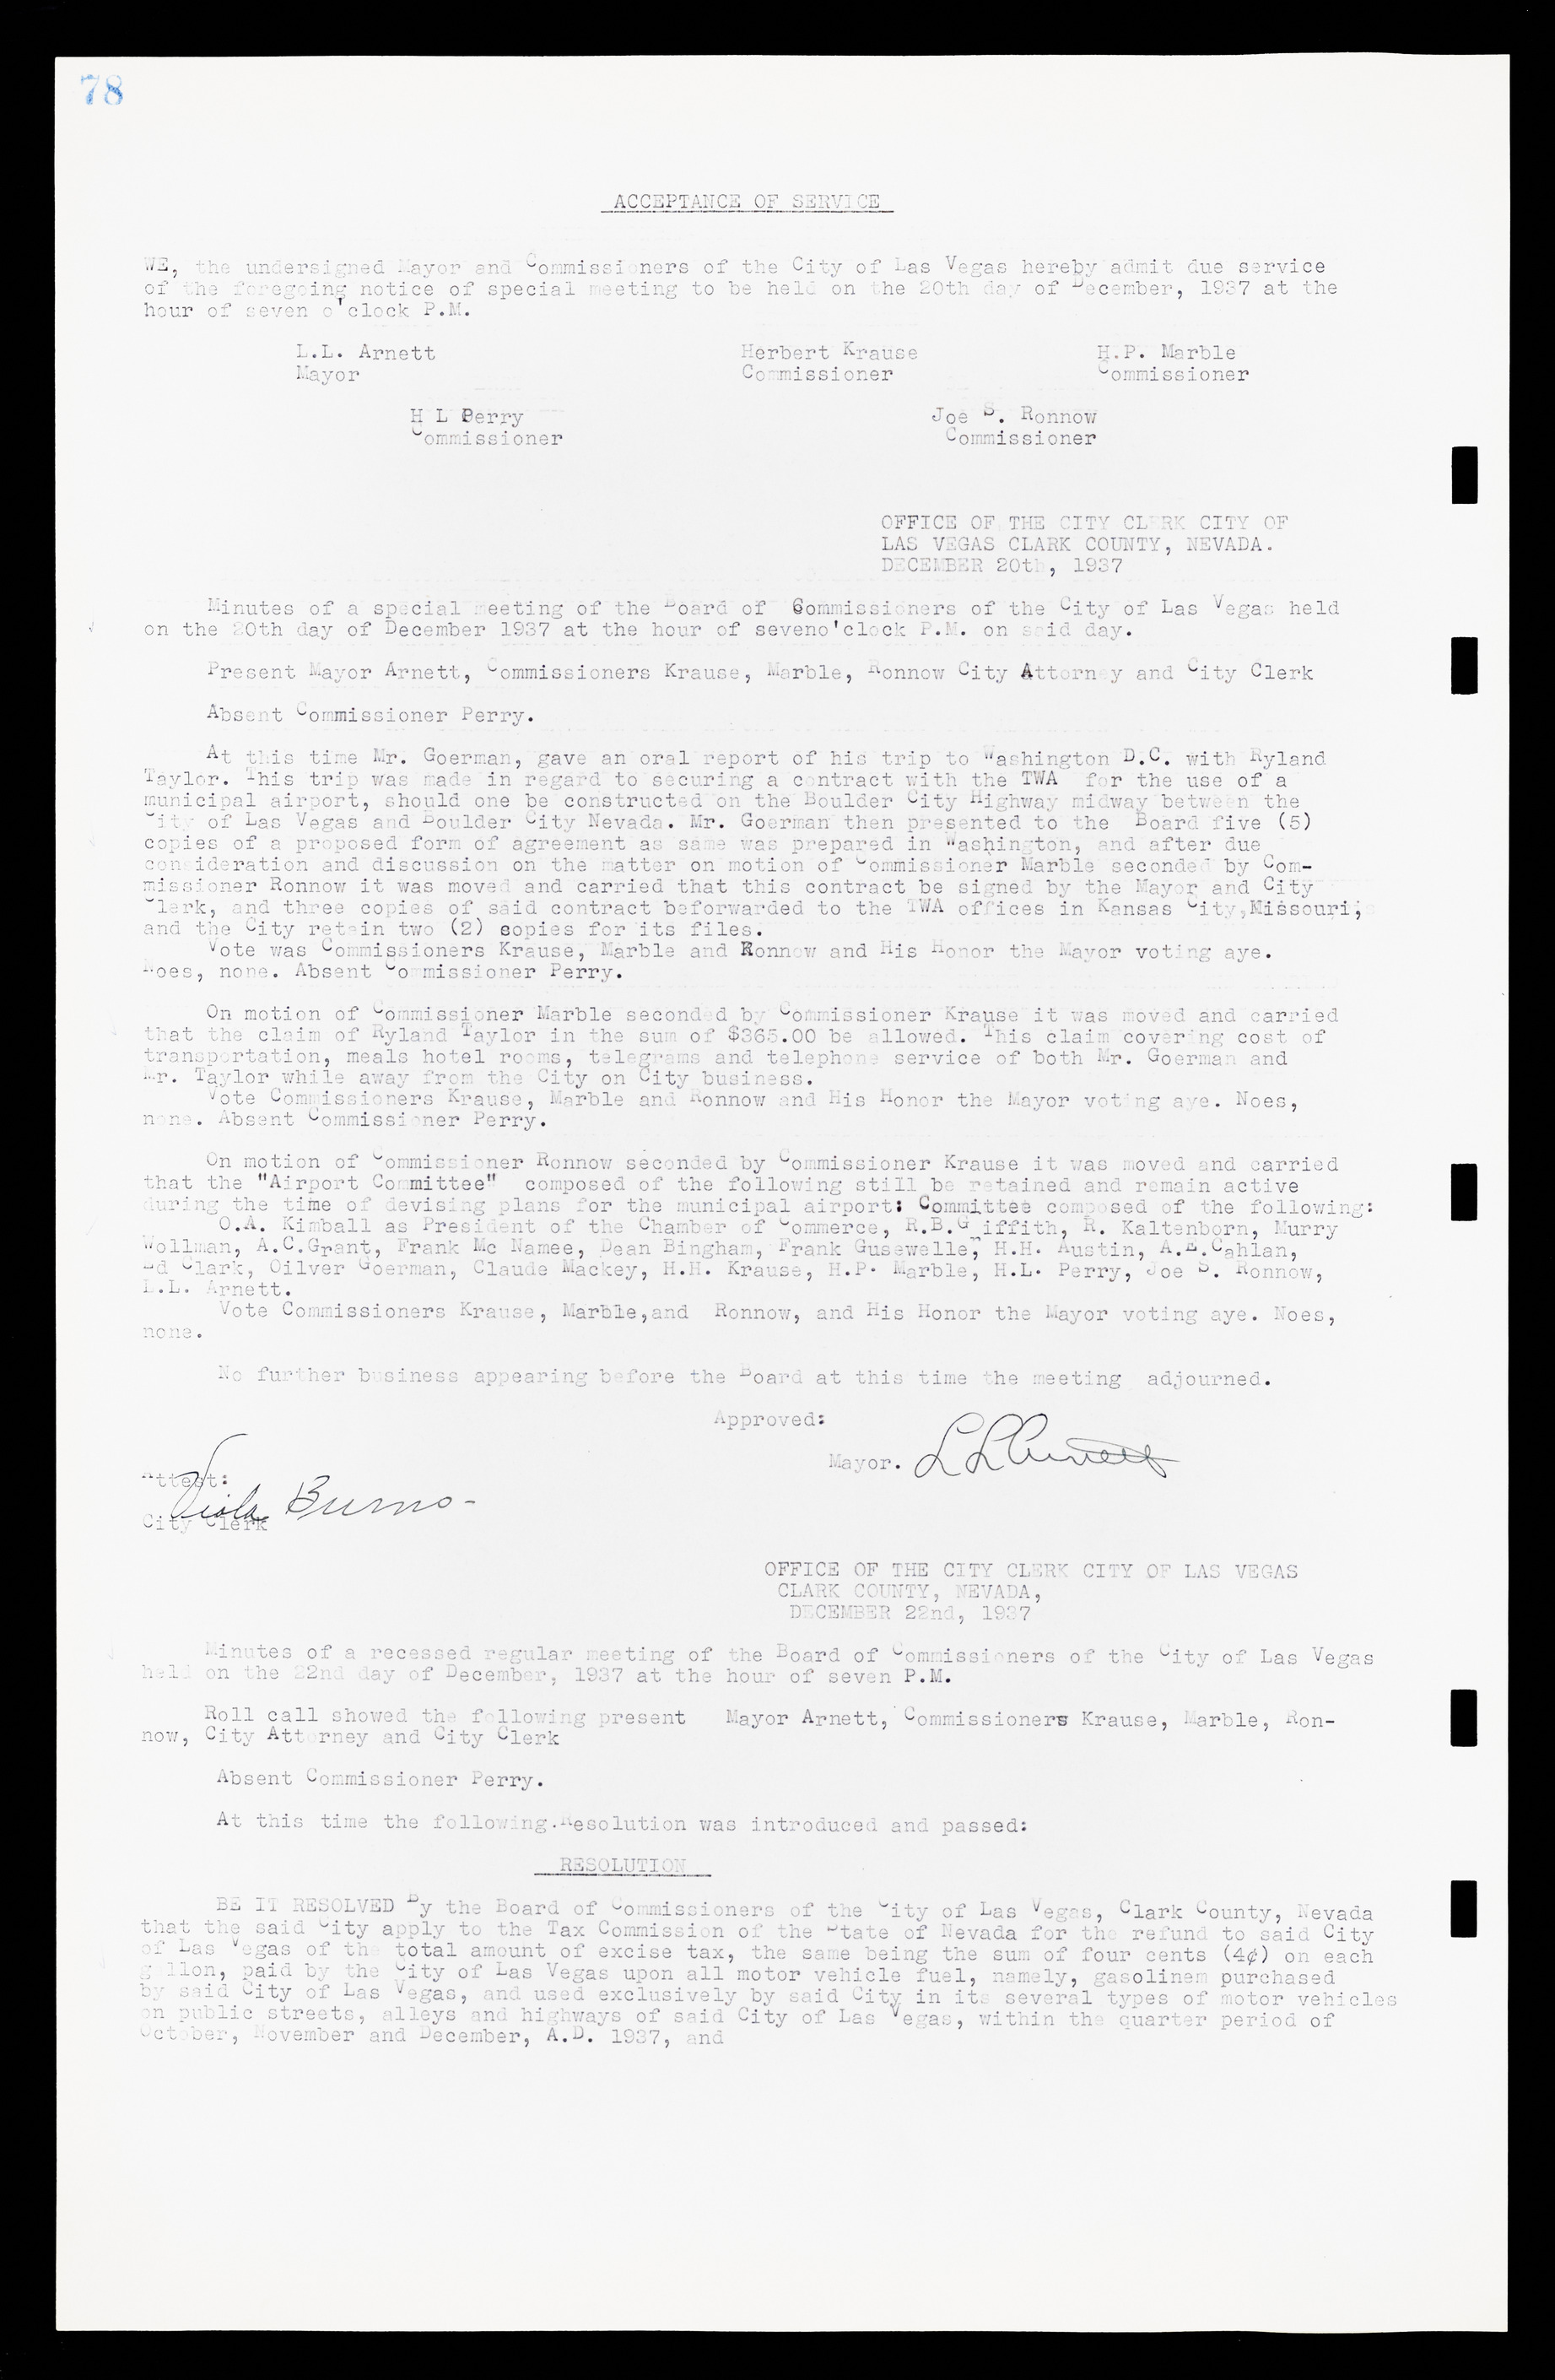 Las Vegas City Commission Minutes, February 17, 1937 to August 4, 1942, lvc000004-87